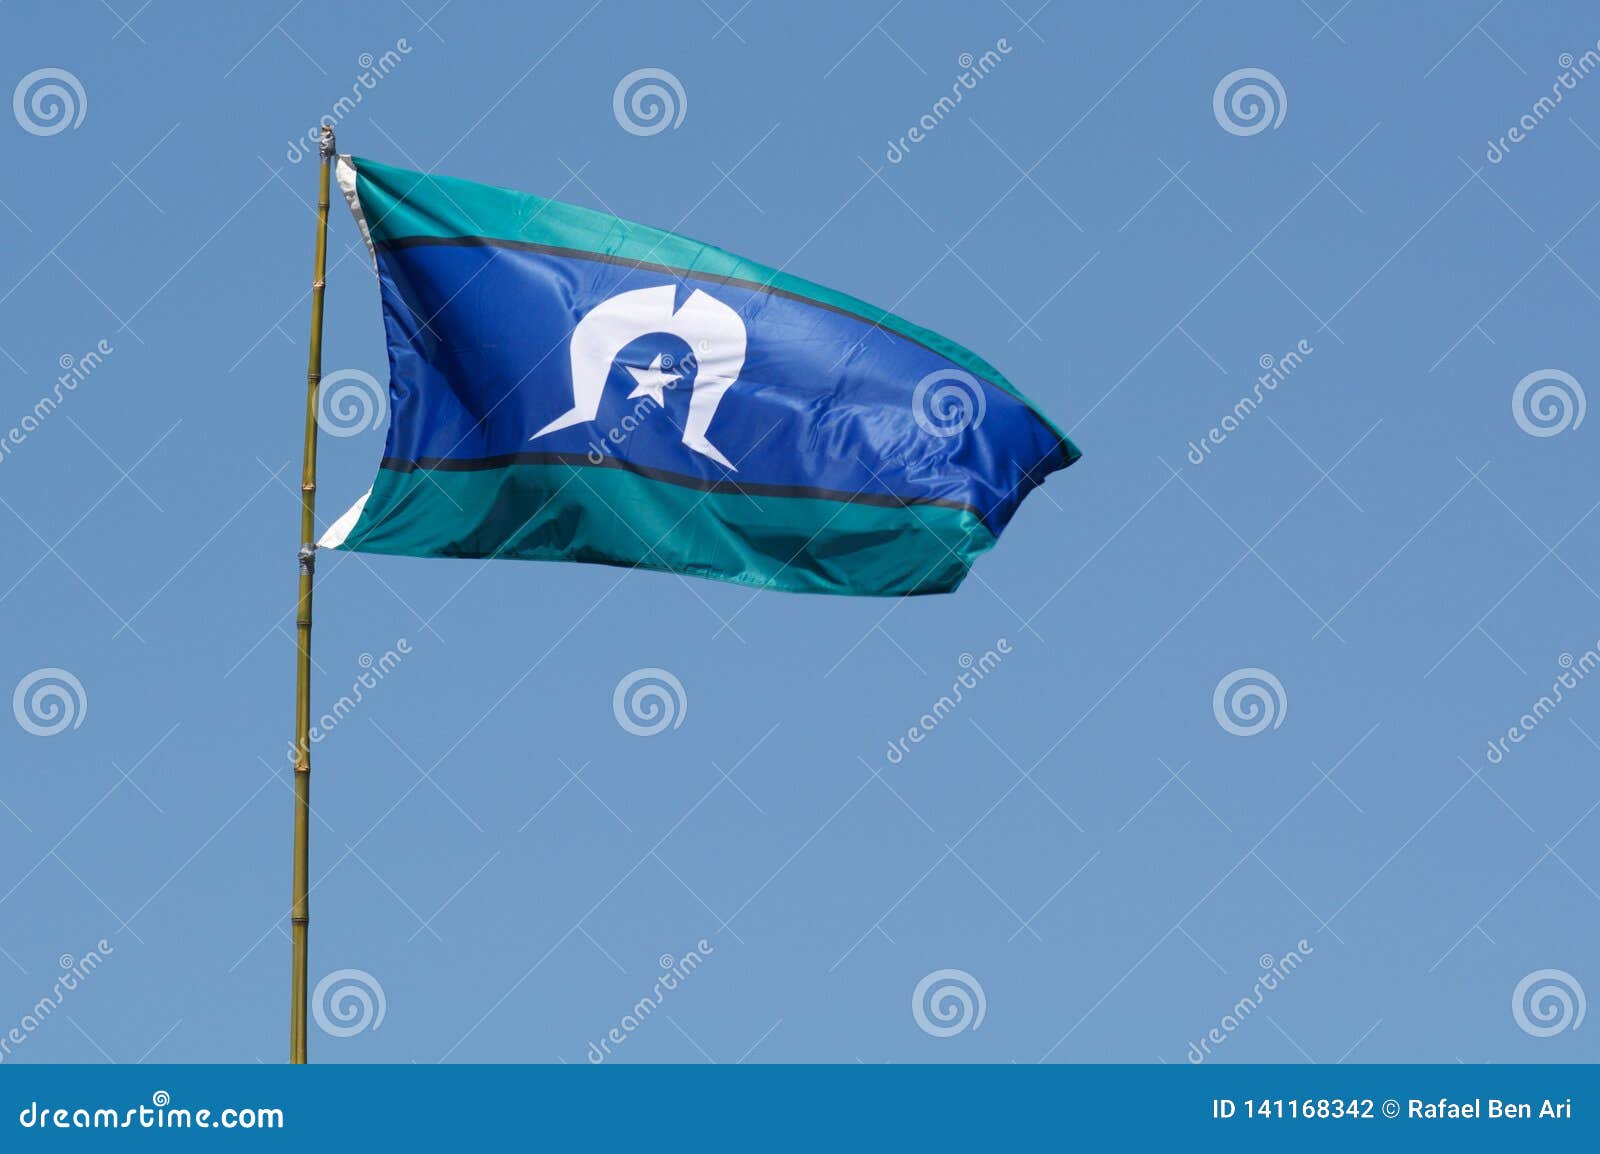 the torres strait islander flag